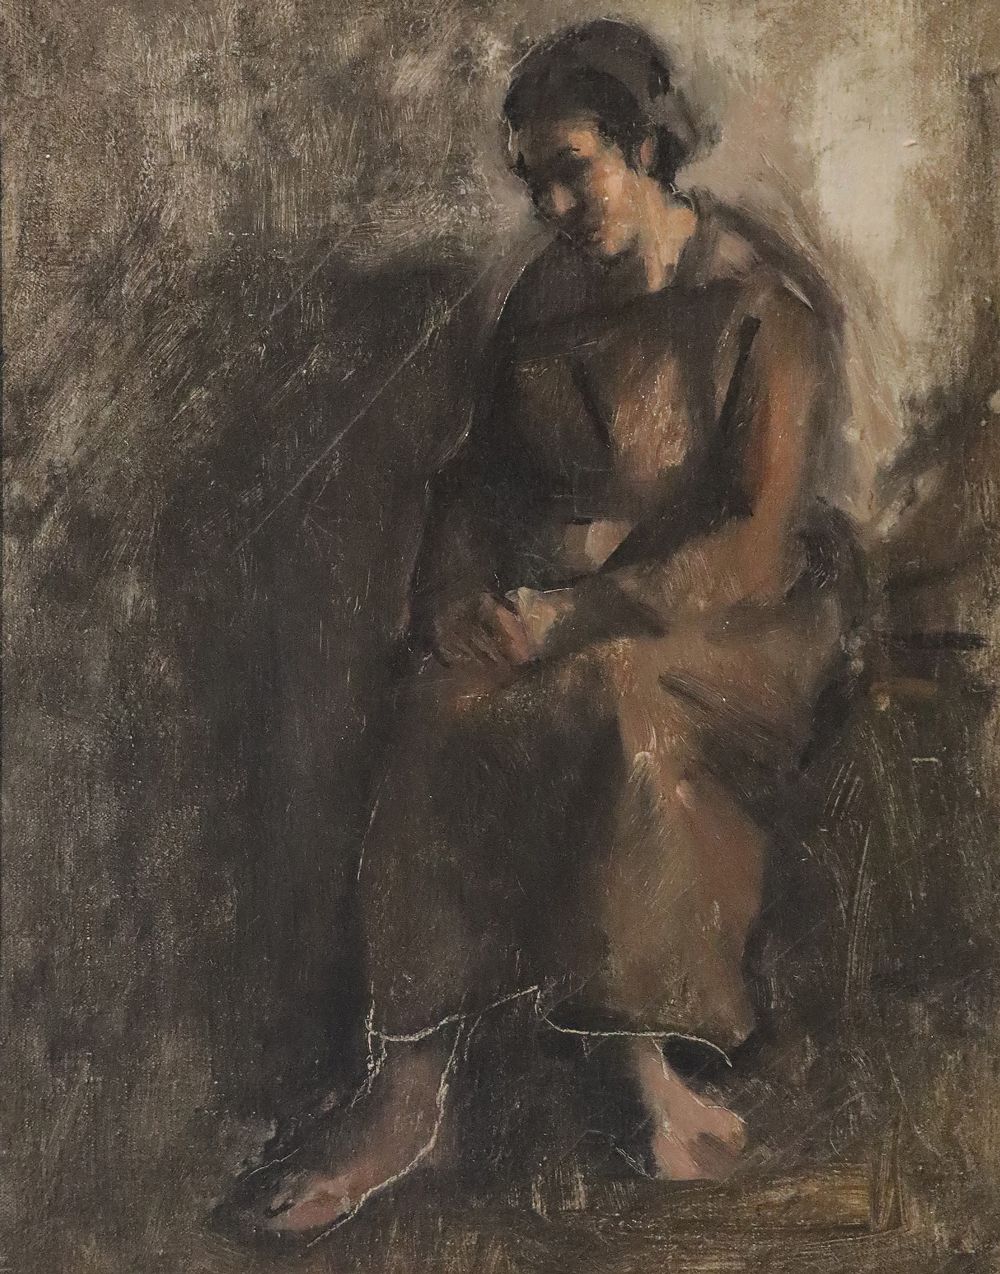 Lot 129 - PORTRAIT OF A SEATED WOMAN by Irish School